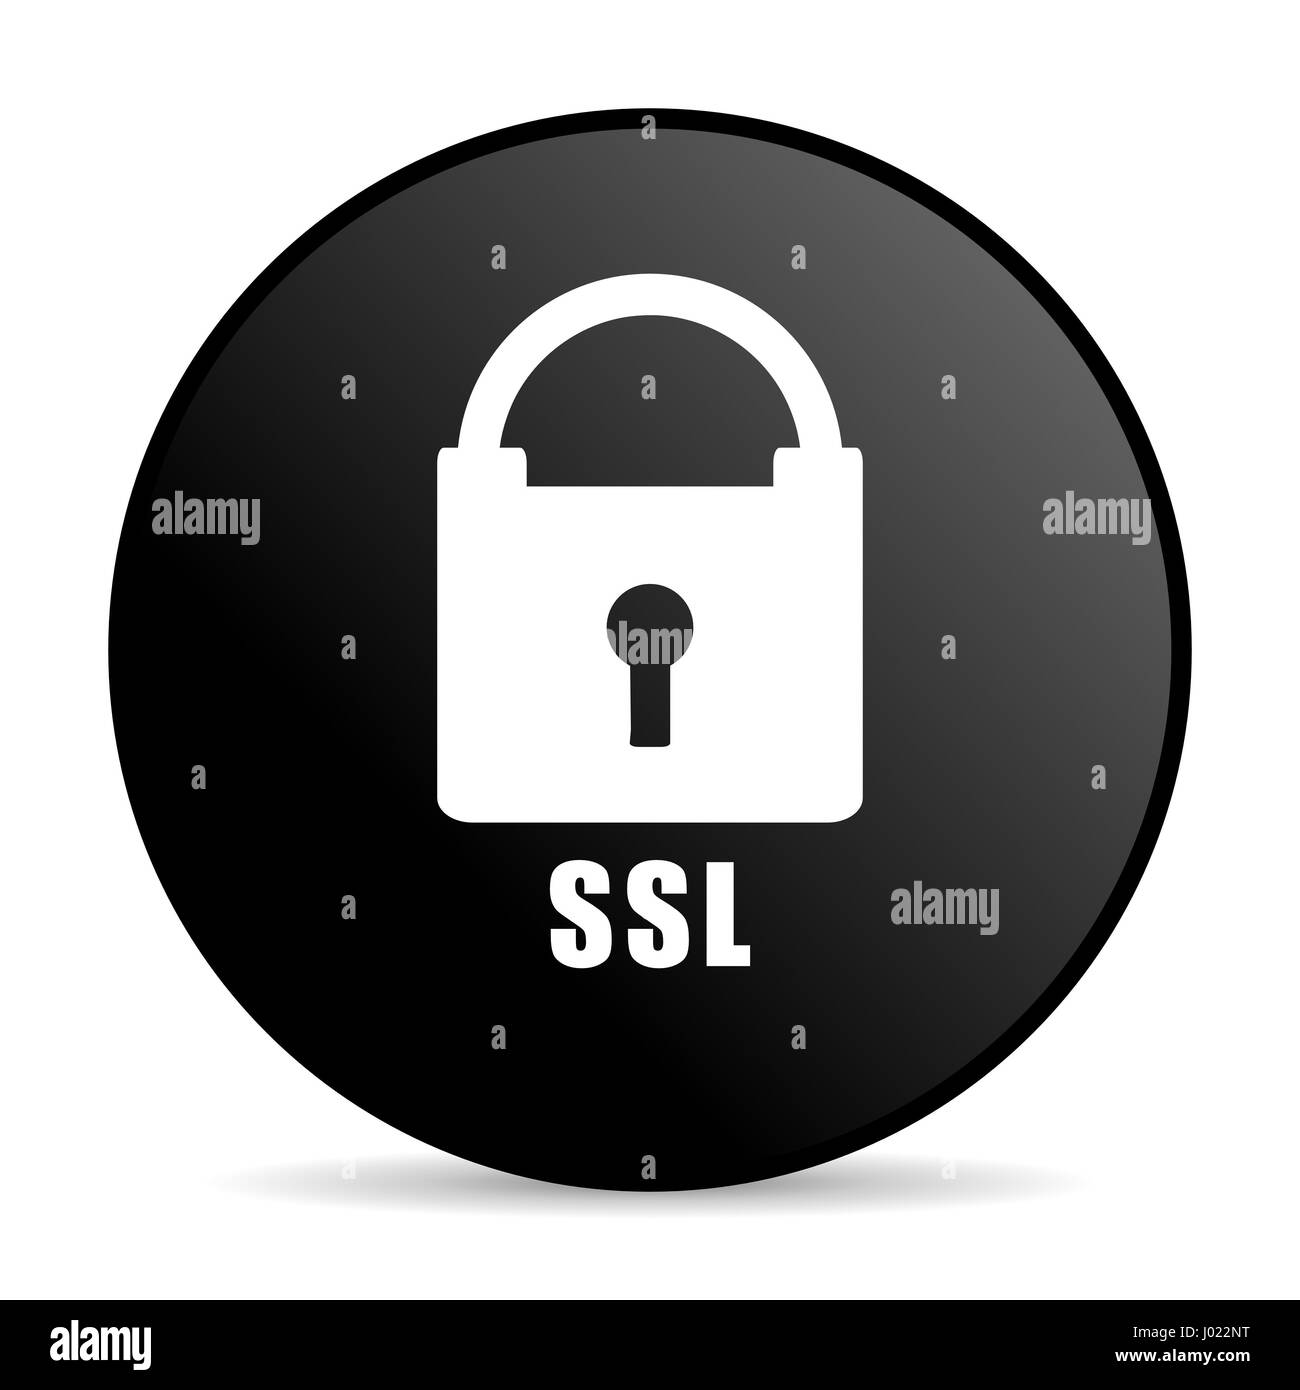 Csl black color web design round internet icon on white background. Stock Photo